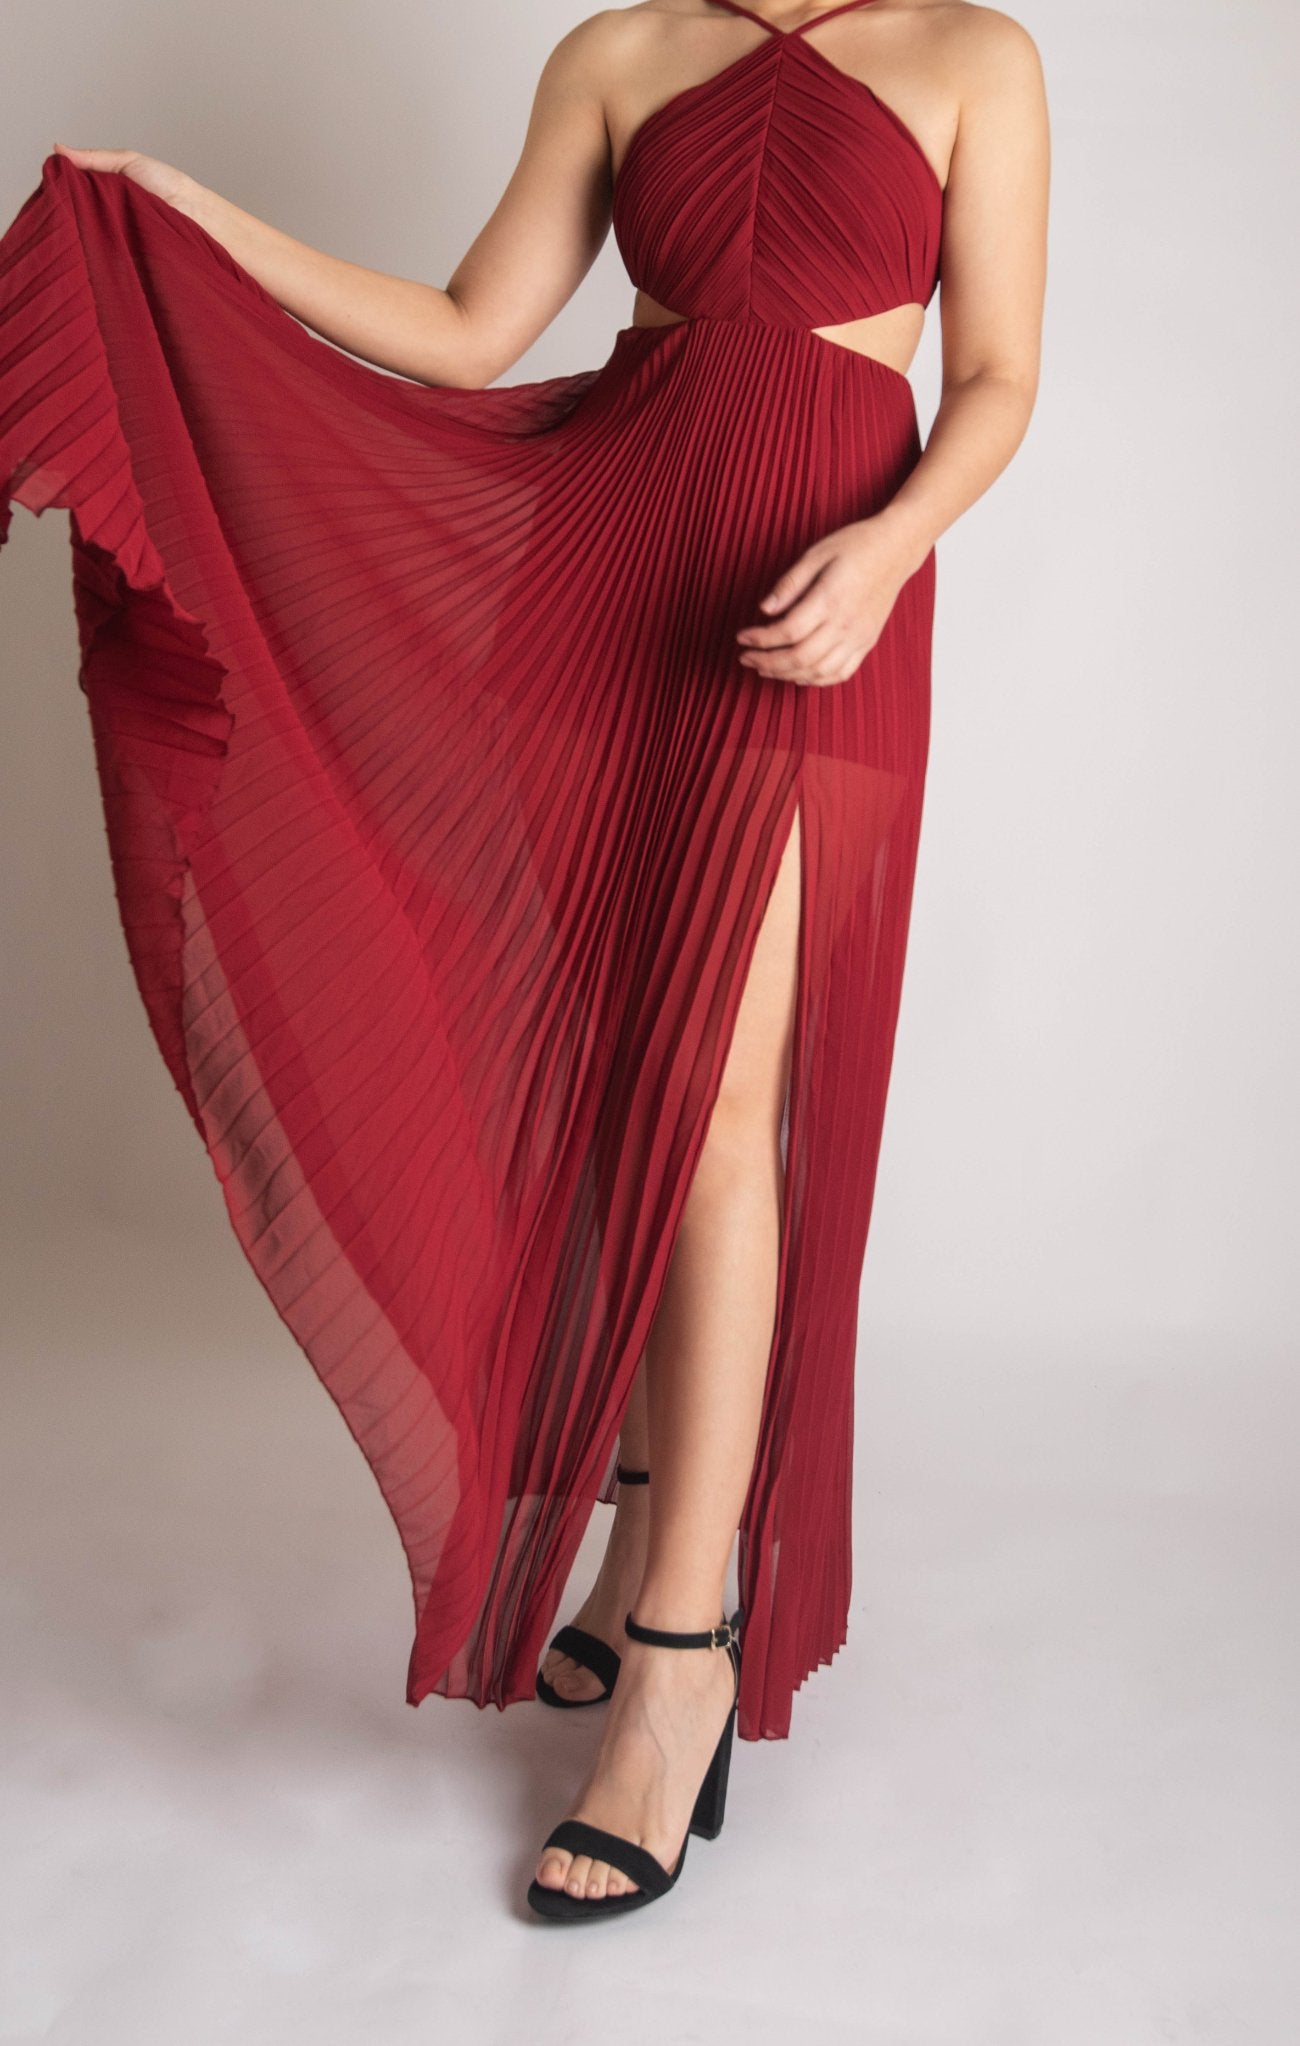 Cressida - rojo - Cindel vestidos maxi, midi, mini, para toda ocasion, largos, de fiesta, de boda